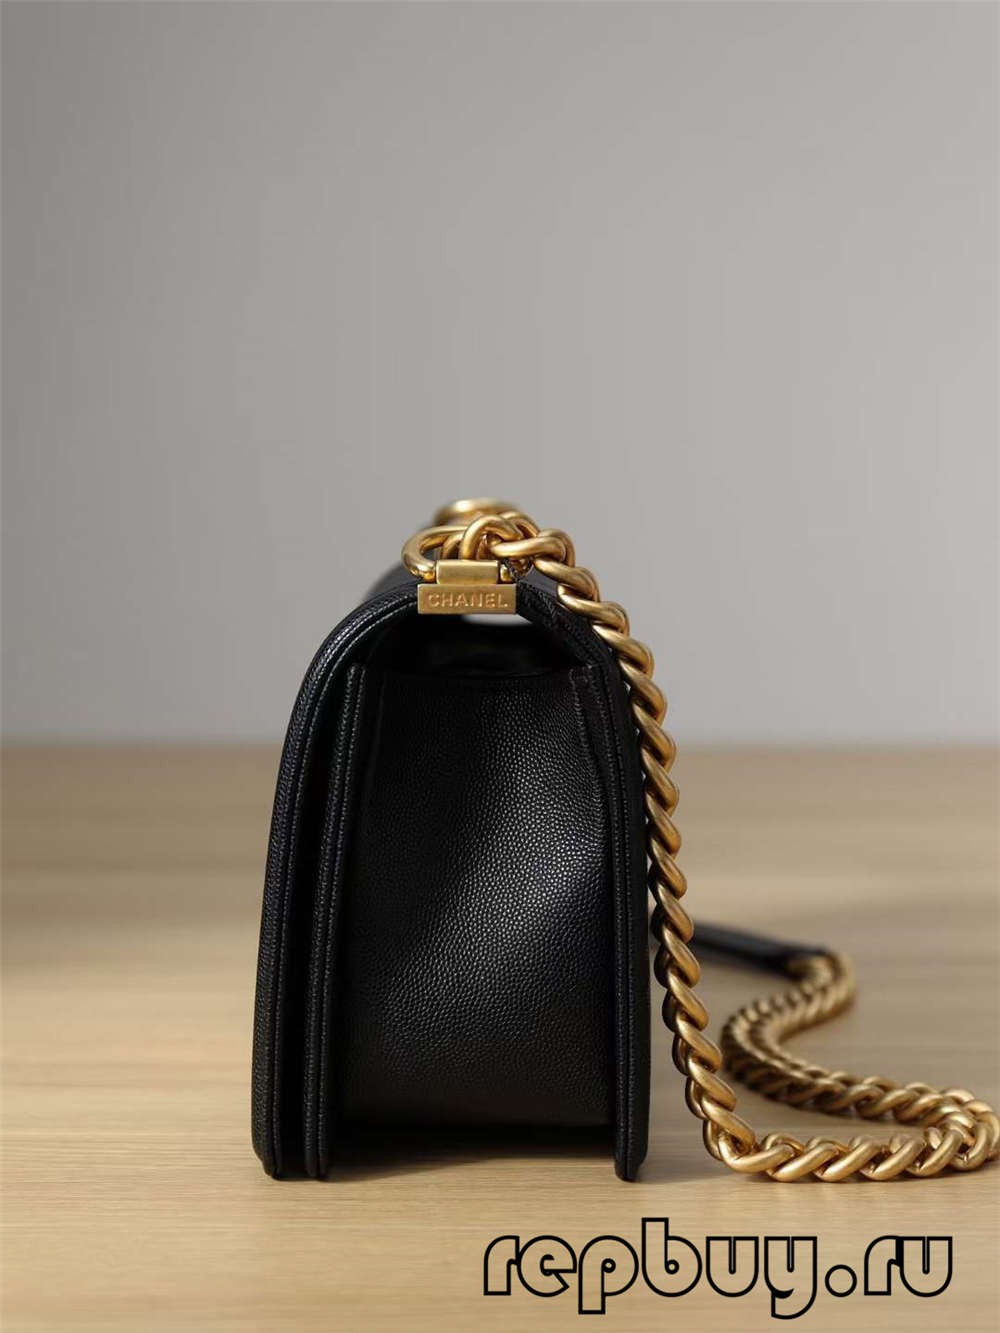 Chanel Leboy Top Replica Handbag Matsakaici Zinare tare (2022 Edition) -Mafi kyawun ingancin Jakar Louis Vuitton Bag Online Store, Replica designer bag ru